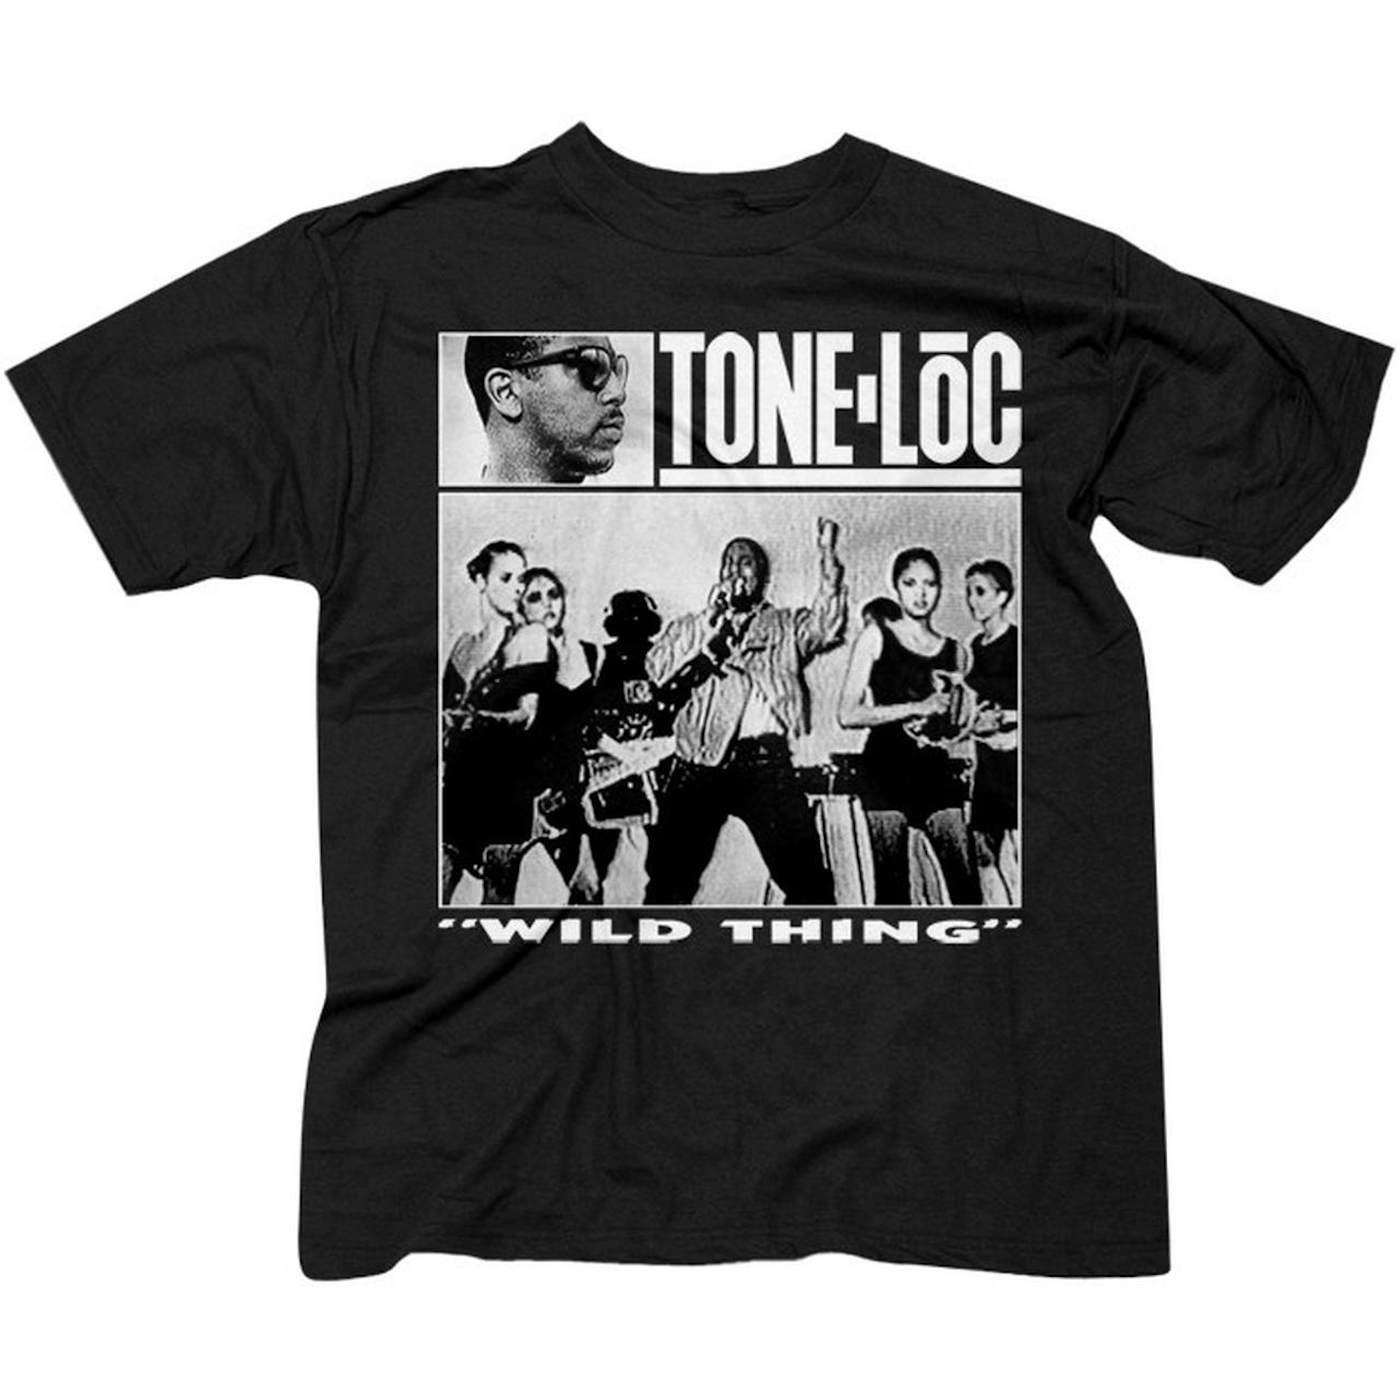 Tone-Loc "Wild Thing" Men's Black T-shirt